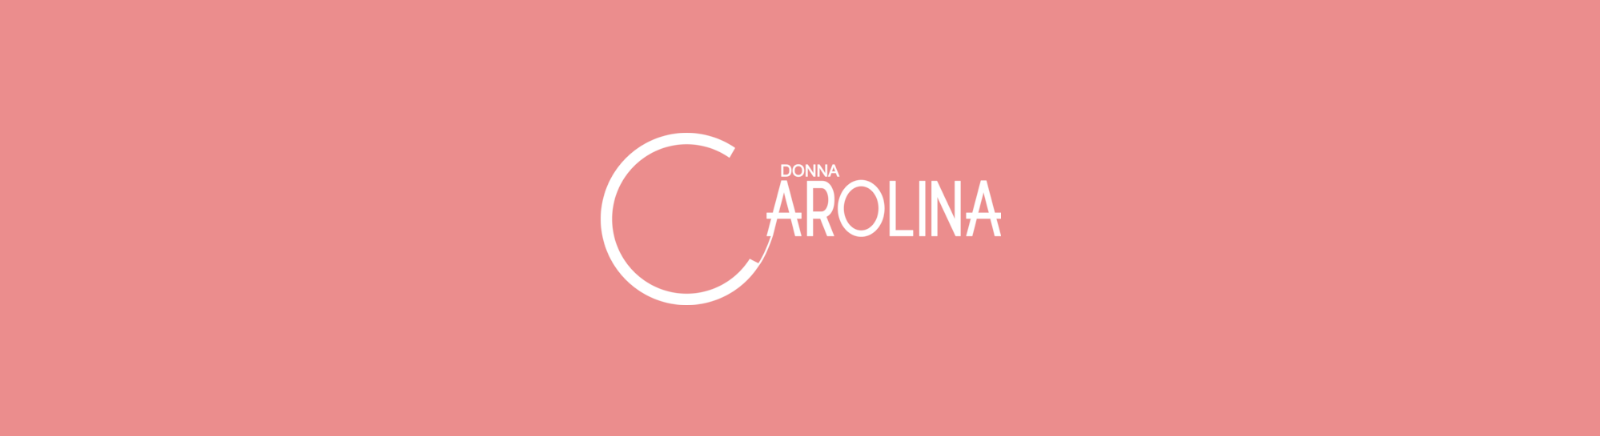 Juppen: Donna Carolina Pumps Schuhe online kaufen online shoppen